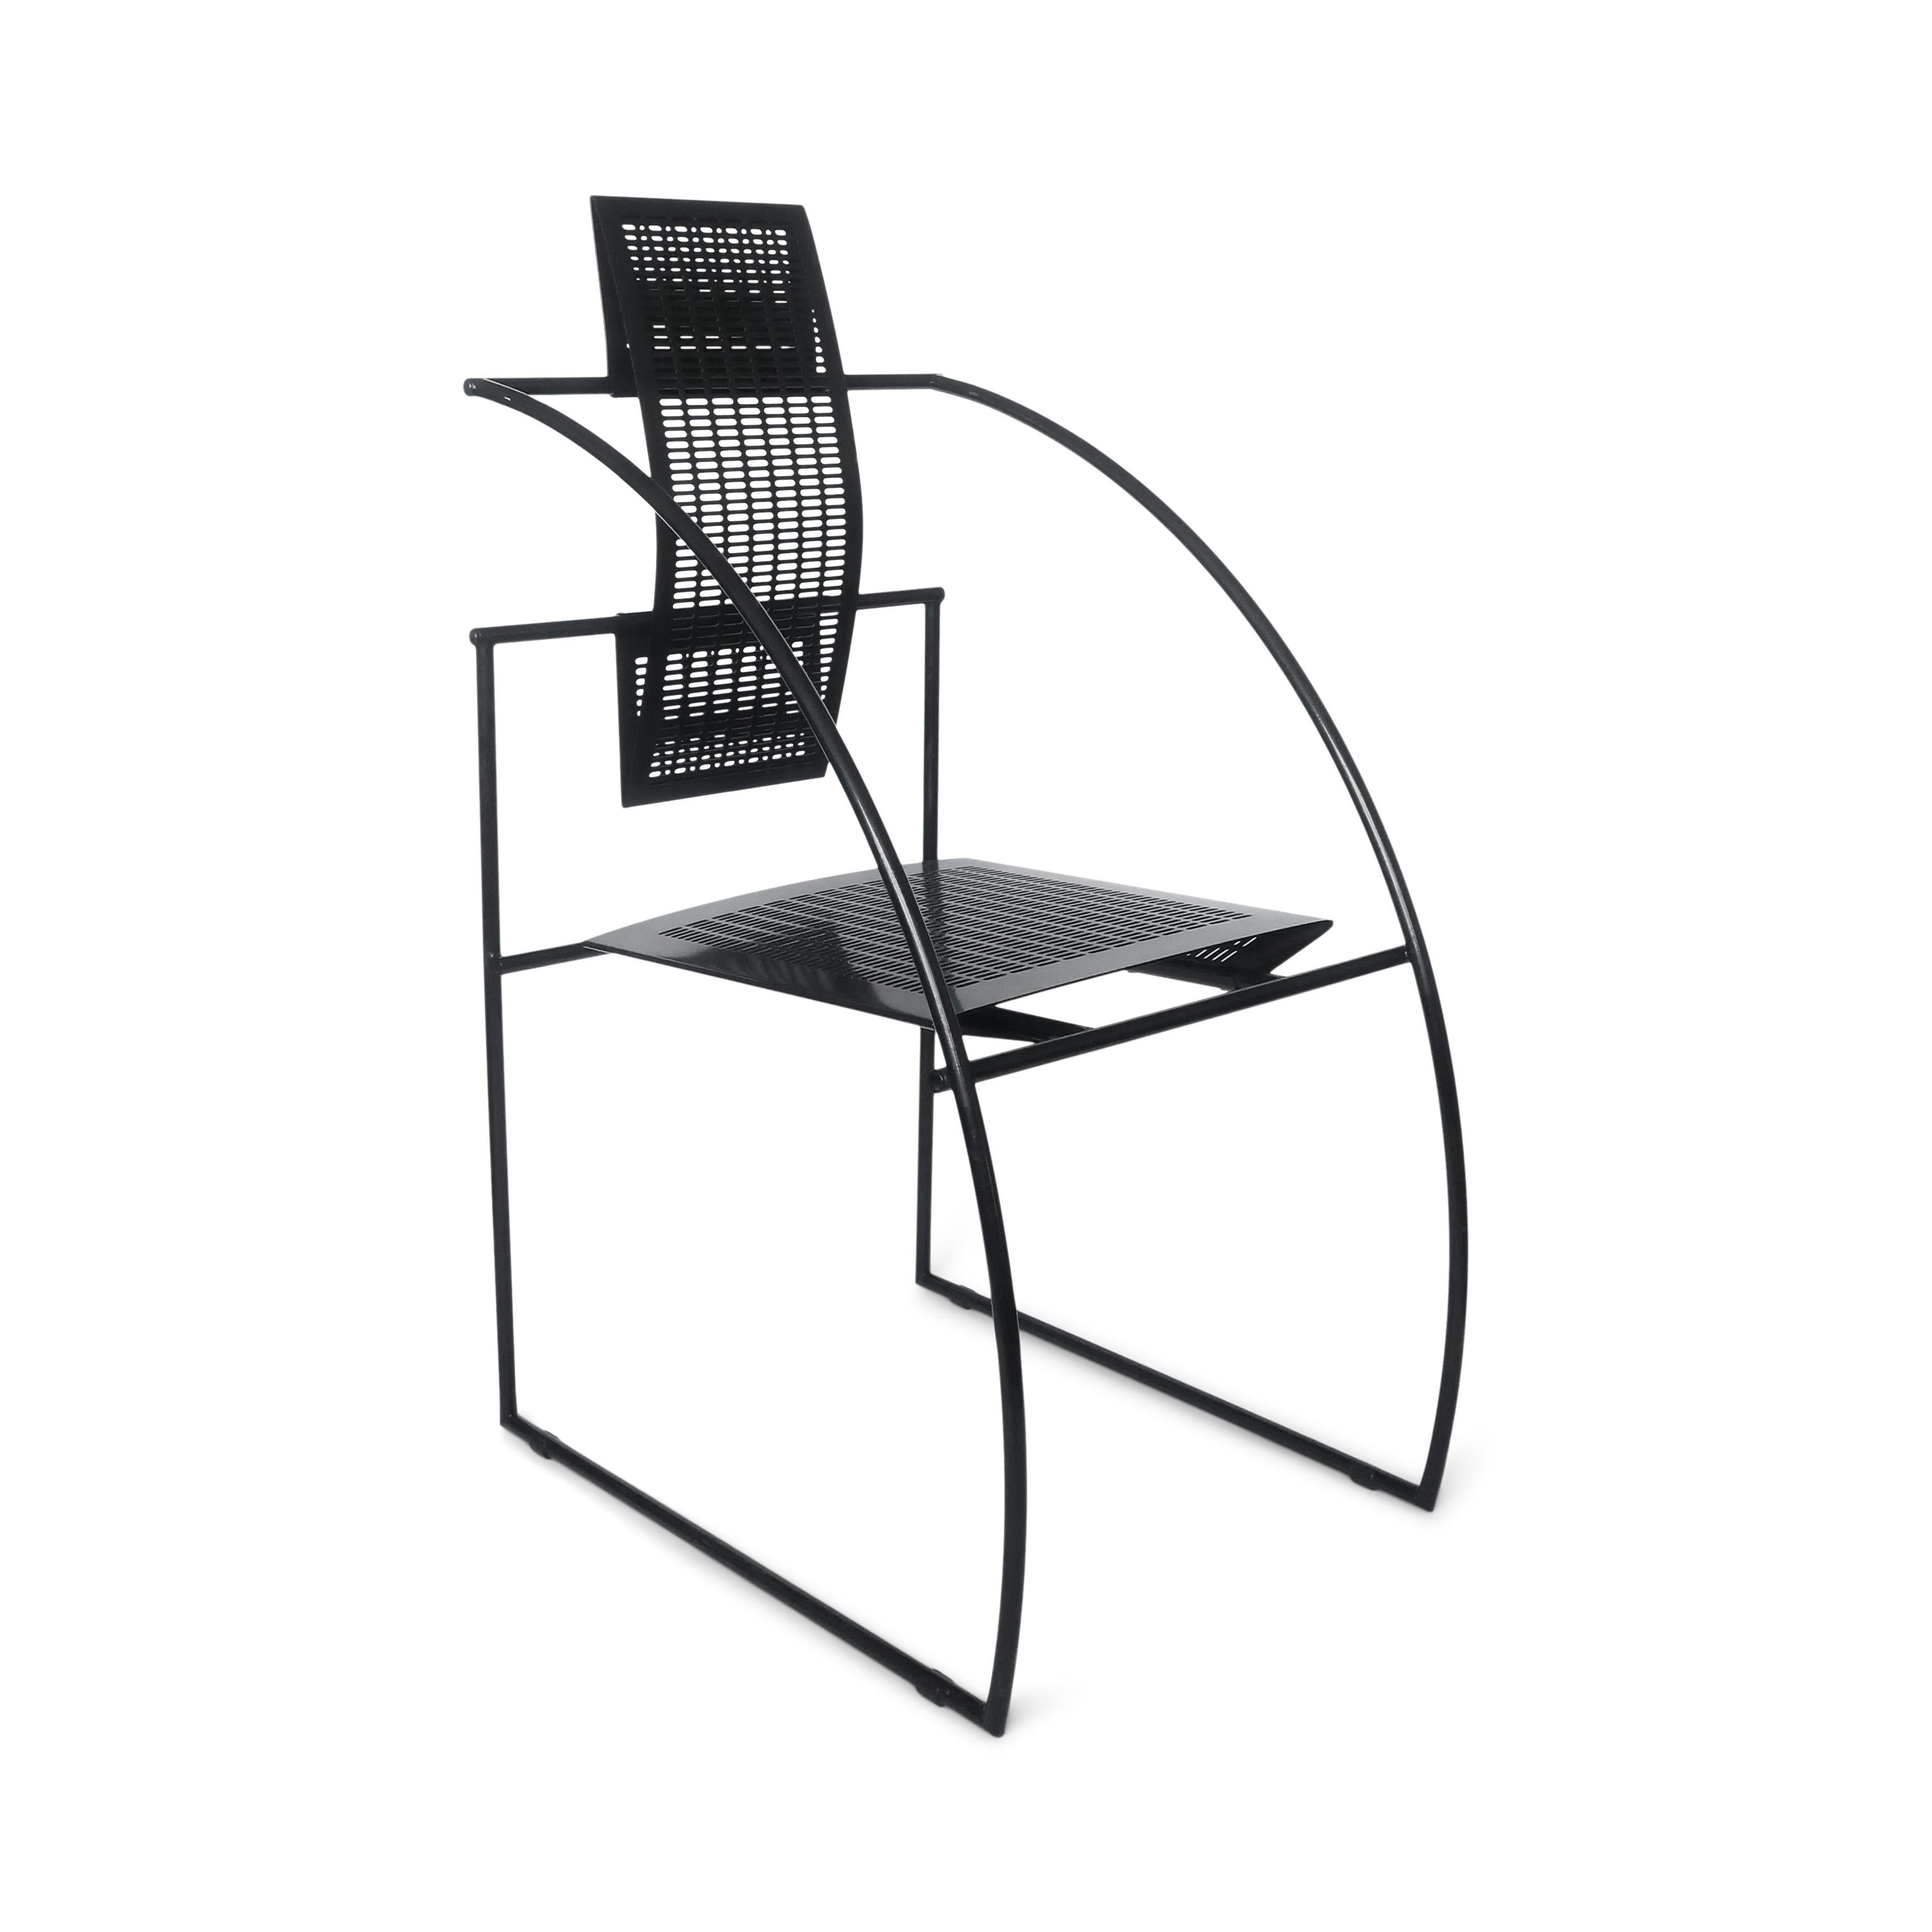 Post-Modern Postmodern Black Quinta Chair by Mario Botta for Alias, '1985'